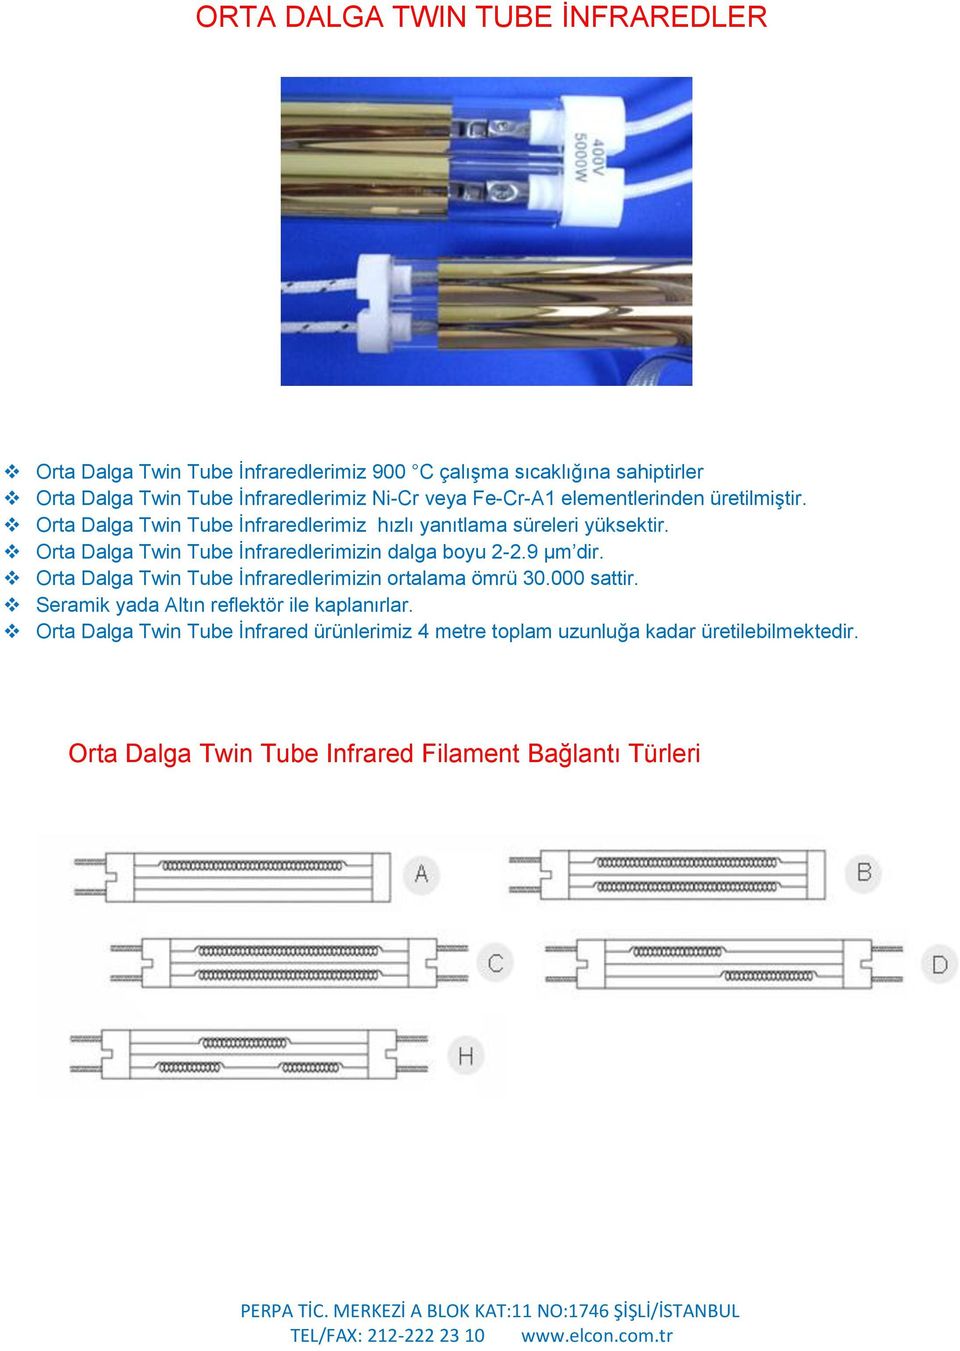 Orta Dalga Twin Tube İnfraredlerimizin dalga boyu 2-2.9 µm dir. Orta Dalga Twin Tube İnfraredlerimizin ortalama ömrü 30.000 sattir.